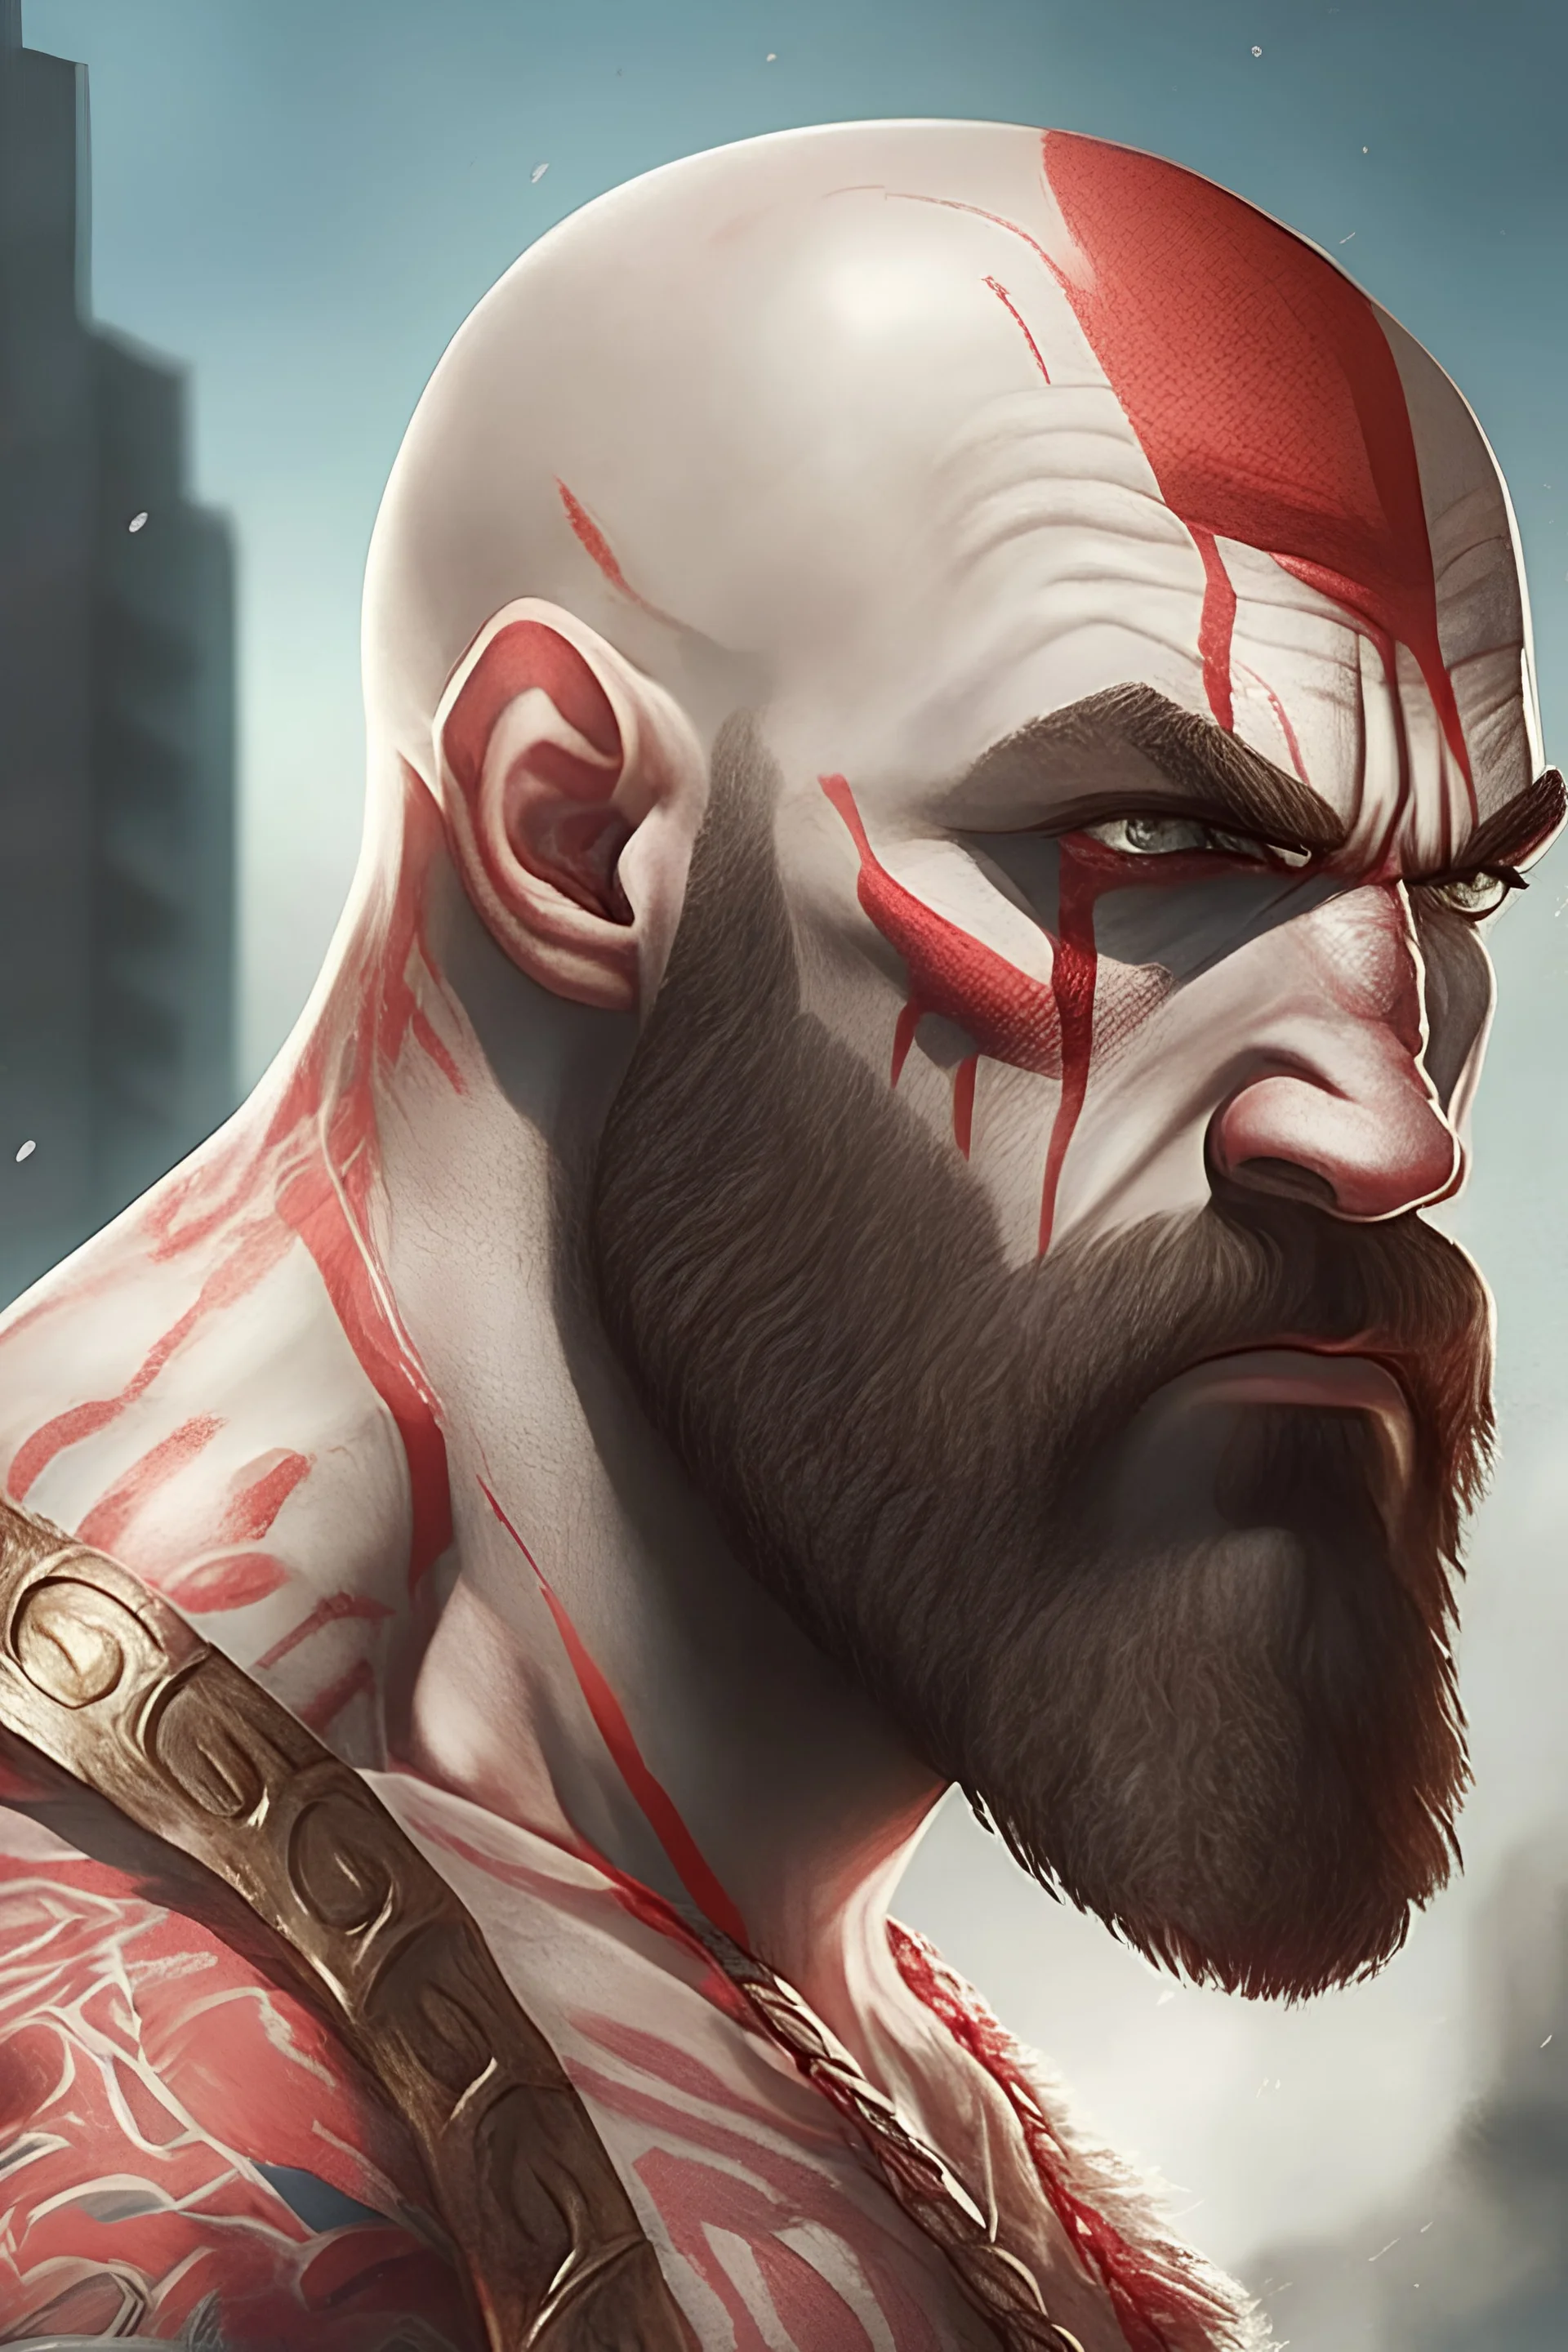 cg from gta Against Kratos